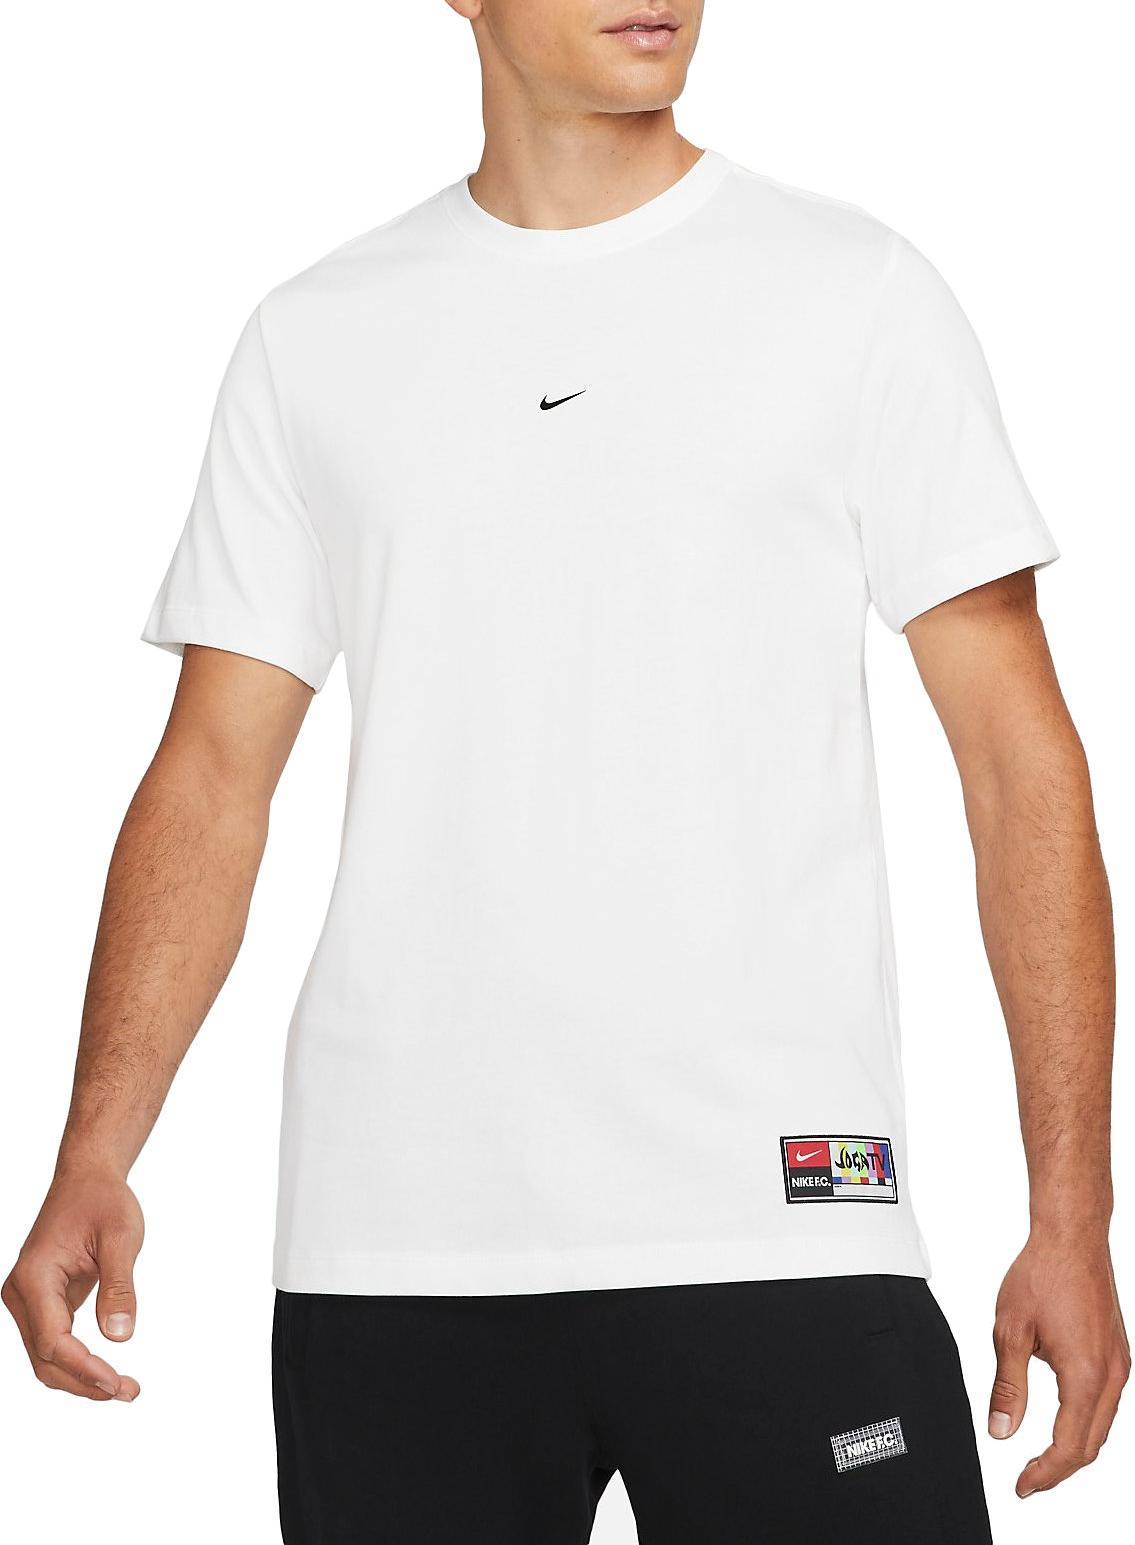 Forbyde Monopol beskyttelse Nike F.C. Joga Bonito Men s T-Shirt - Top4Football.com